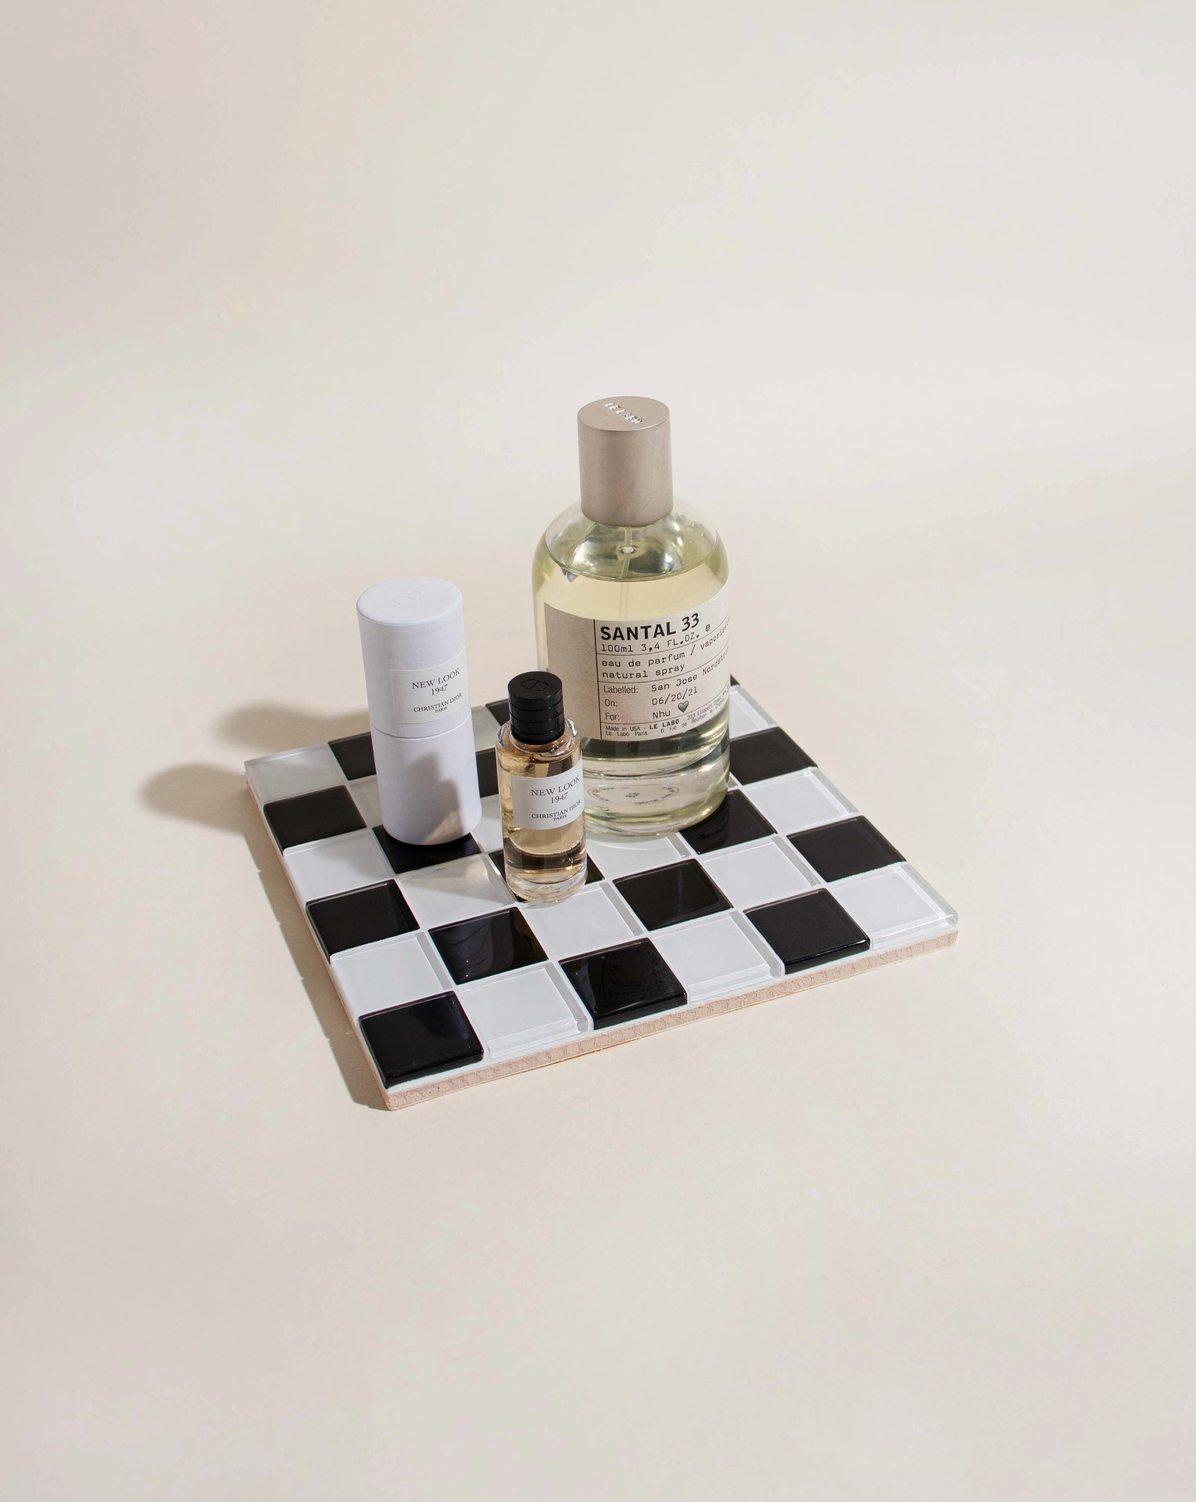 Glass Tile Tray Checkered - Black/White - Subtle Art Studios